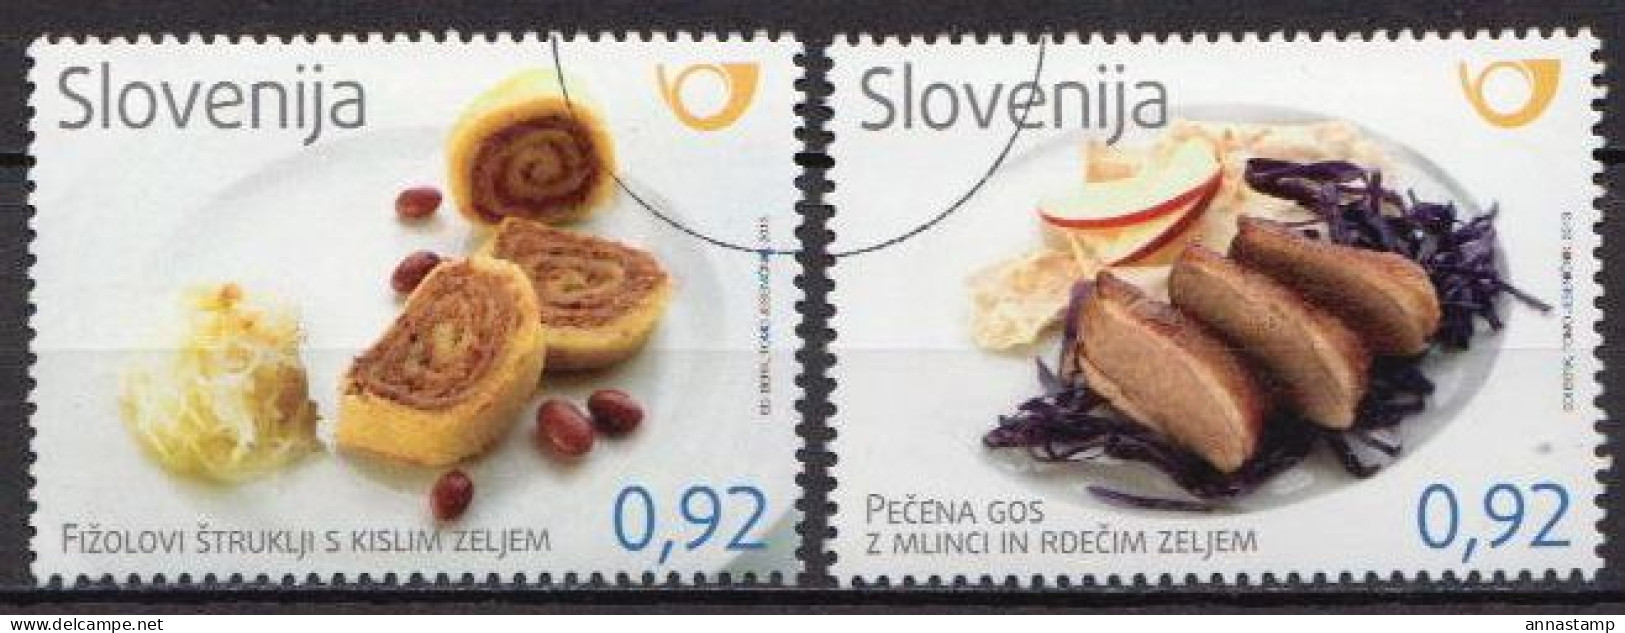 Slovenia MNH Stamps, Specimen - Ernährung